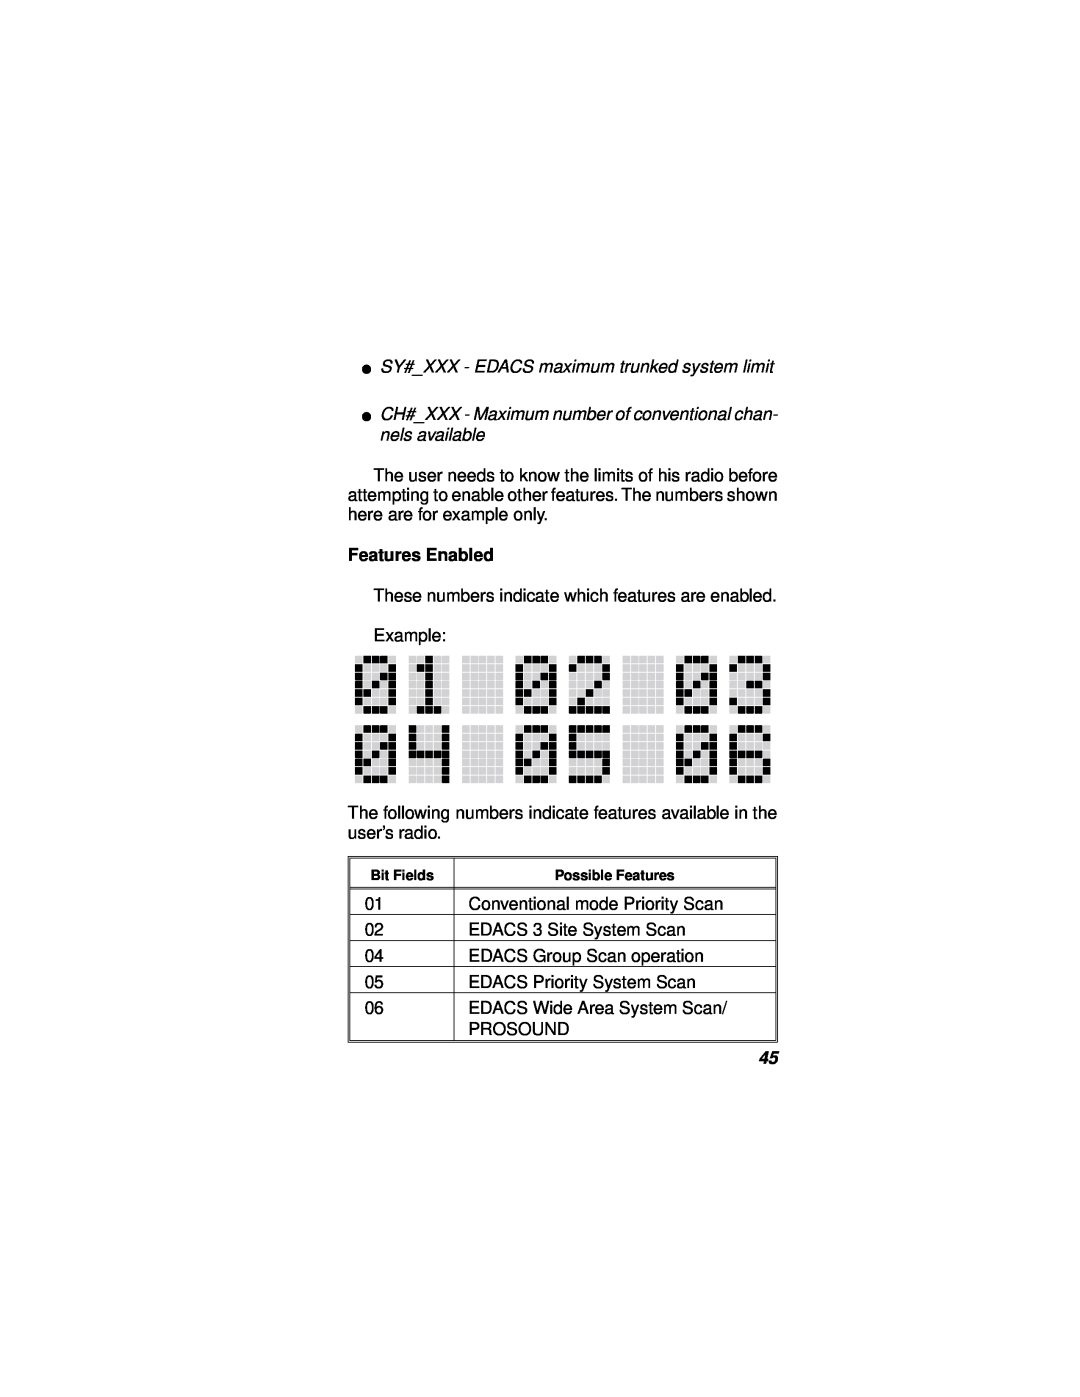 Ericsson LBI-38732E manual SY#XXX - EDACS maximum trunked system limit, Features Enabled 